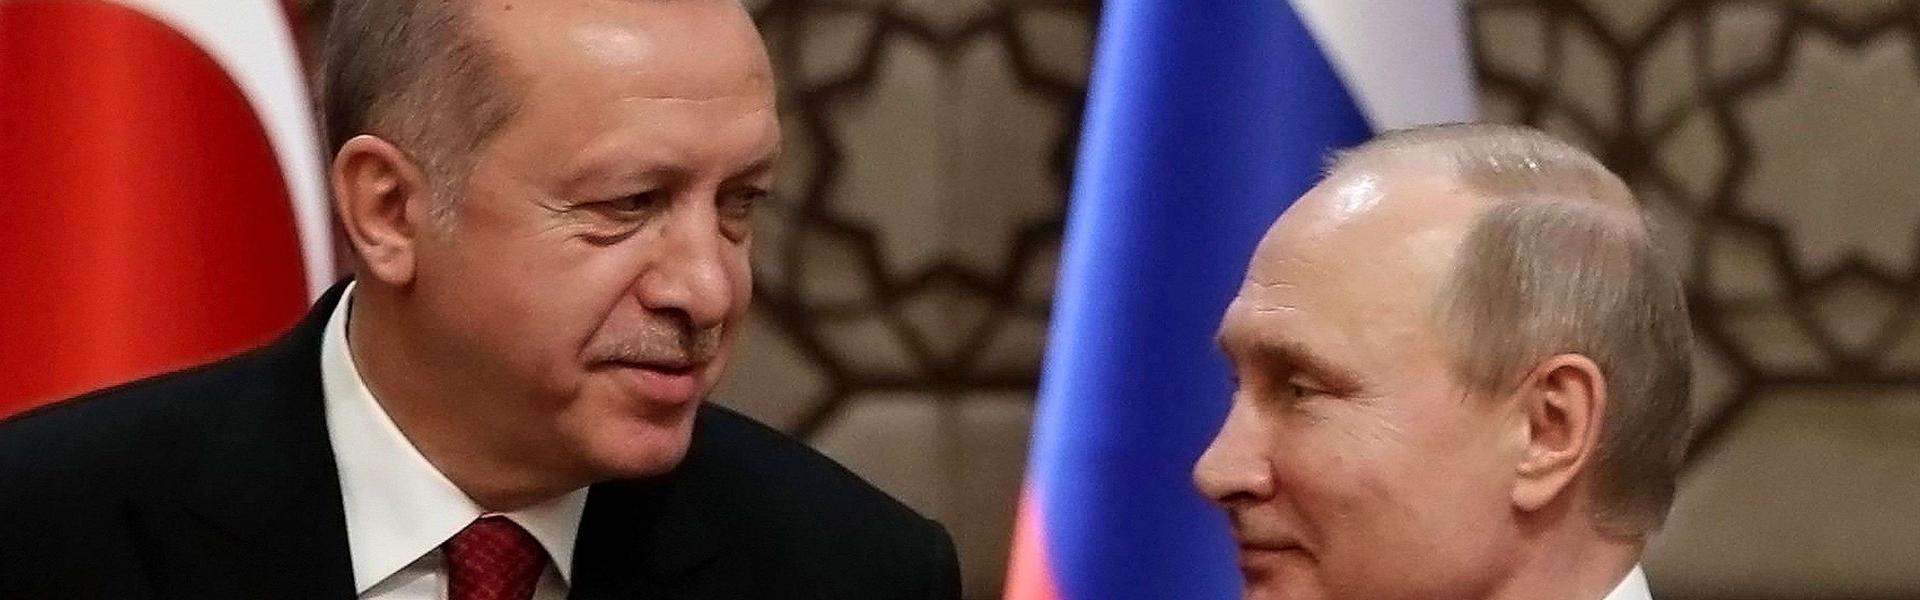 Erdoğan signals Turkey and Russia working together on Syria 1